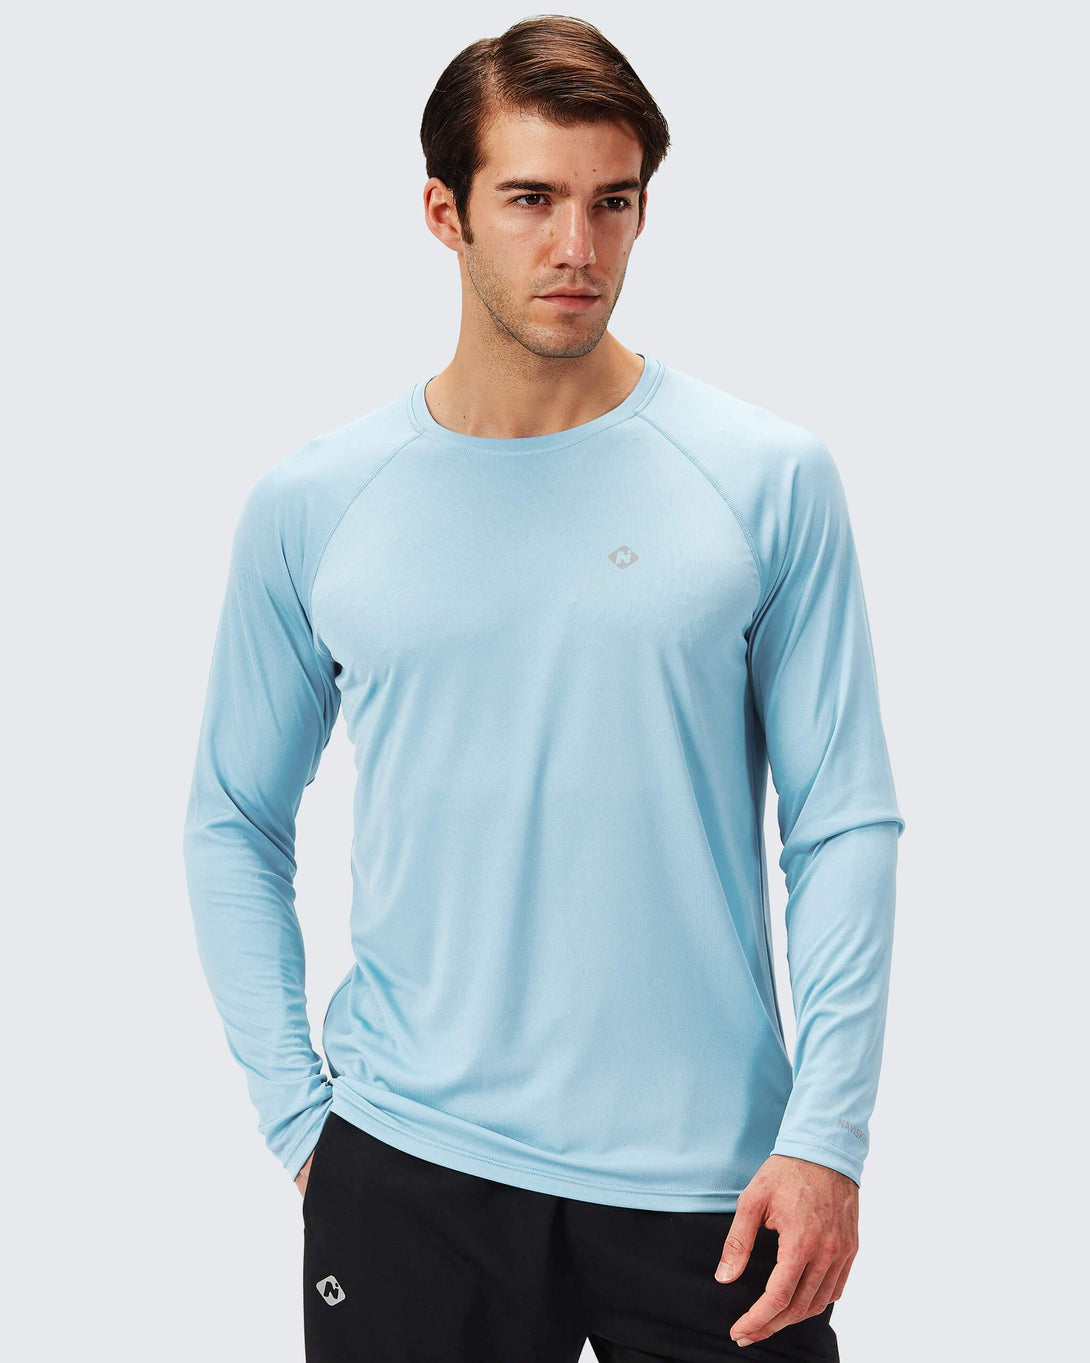 NAVISKIN Men's Quick Dry UPF 50+ Sun Protection Long Sleeve Fishing Tshirt Lightweight Hiking Shirts Rash Guard Swim Shirt, Grey / Large